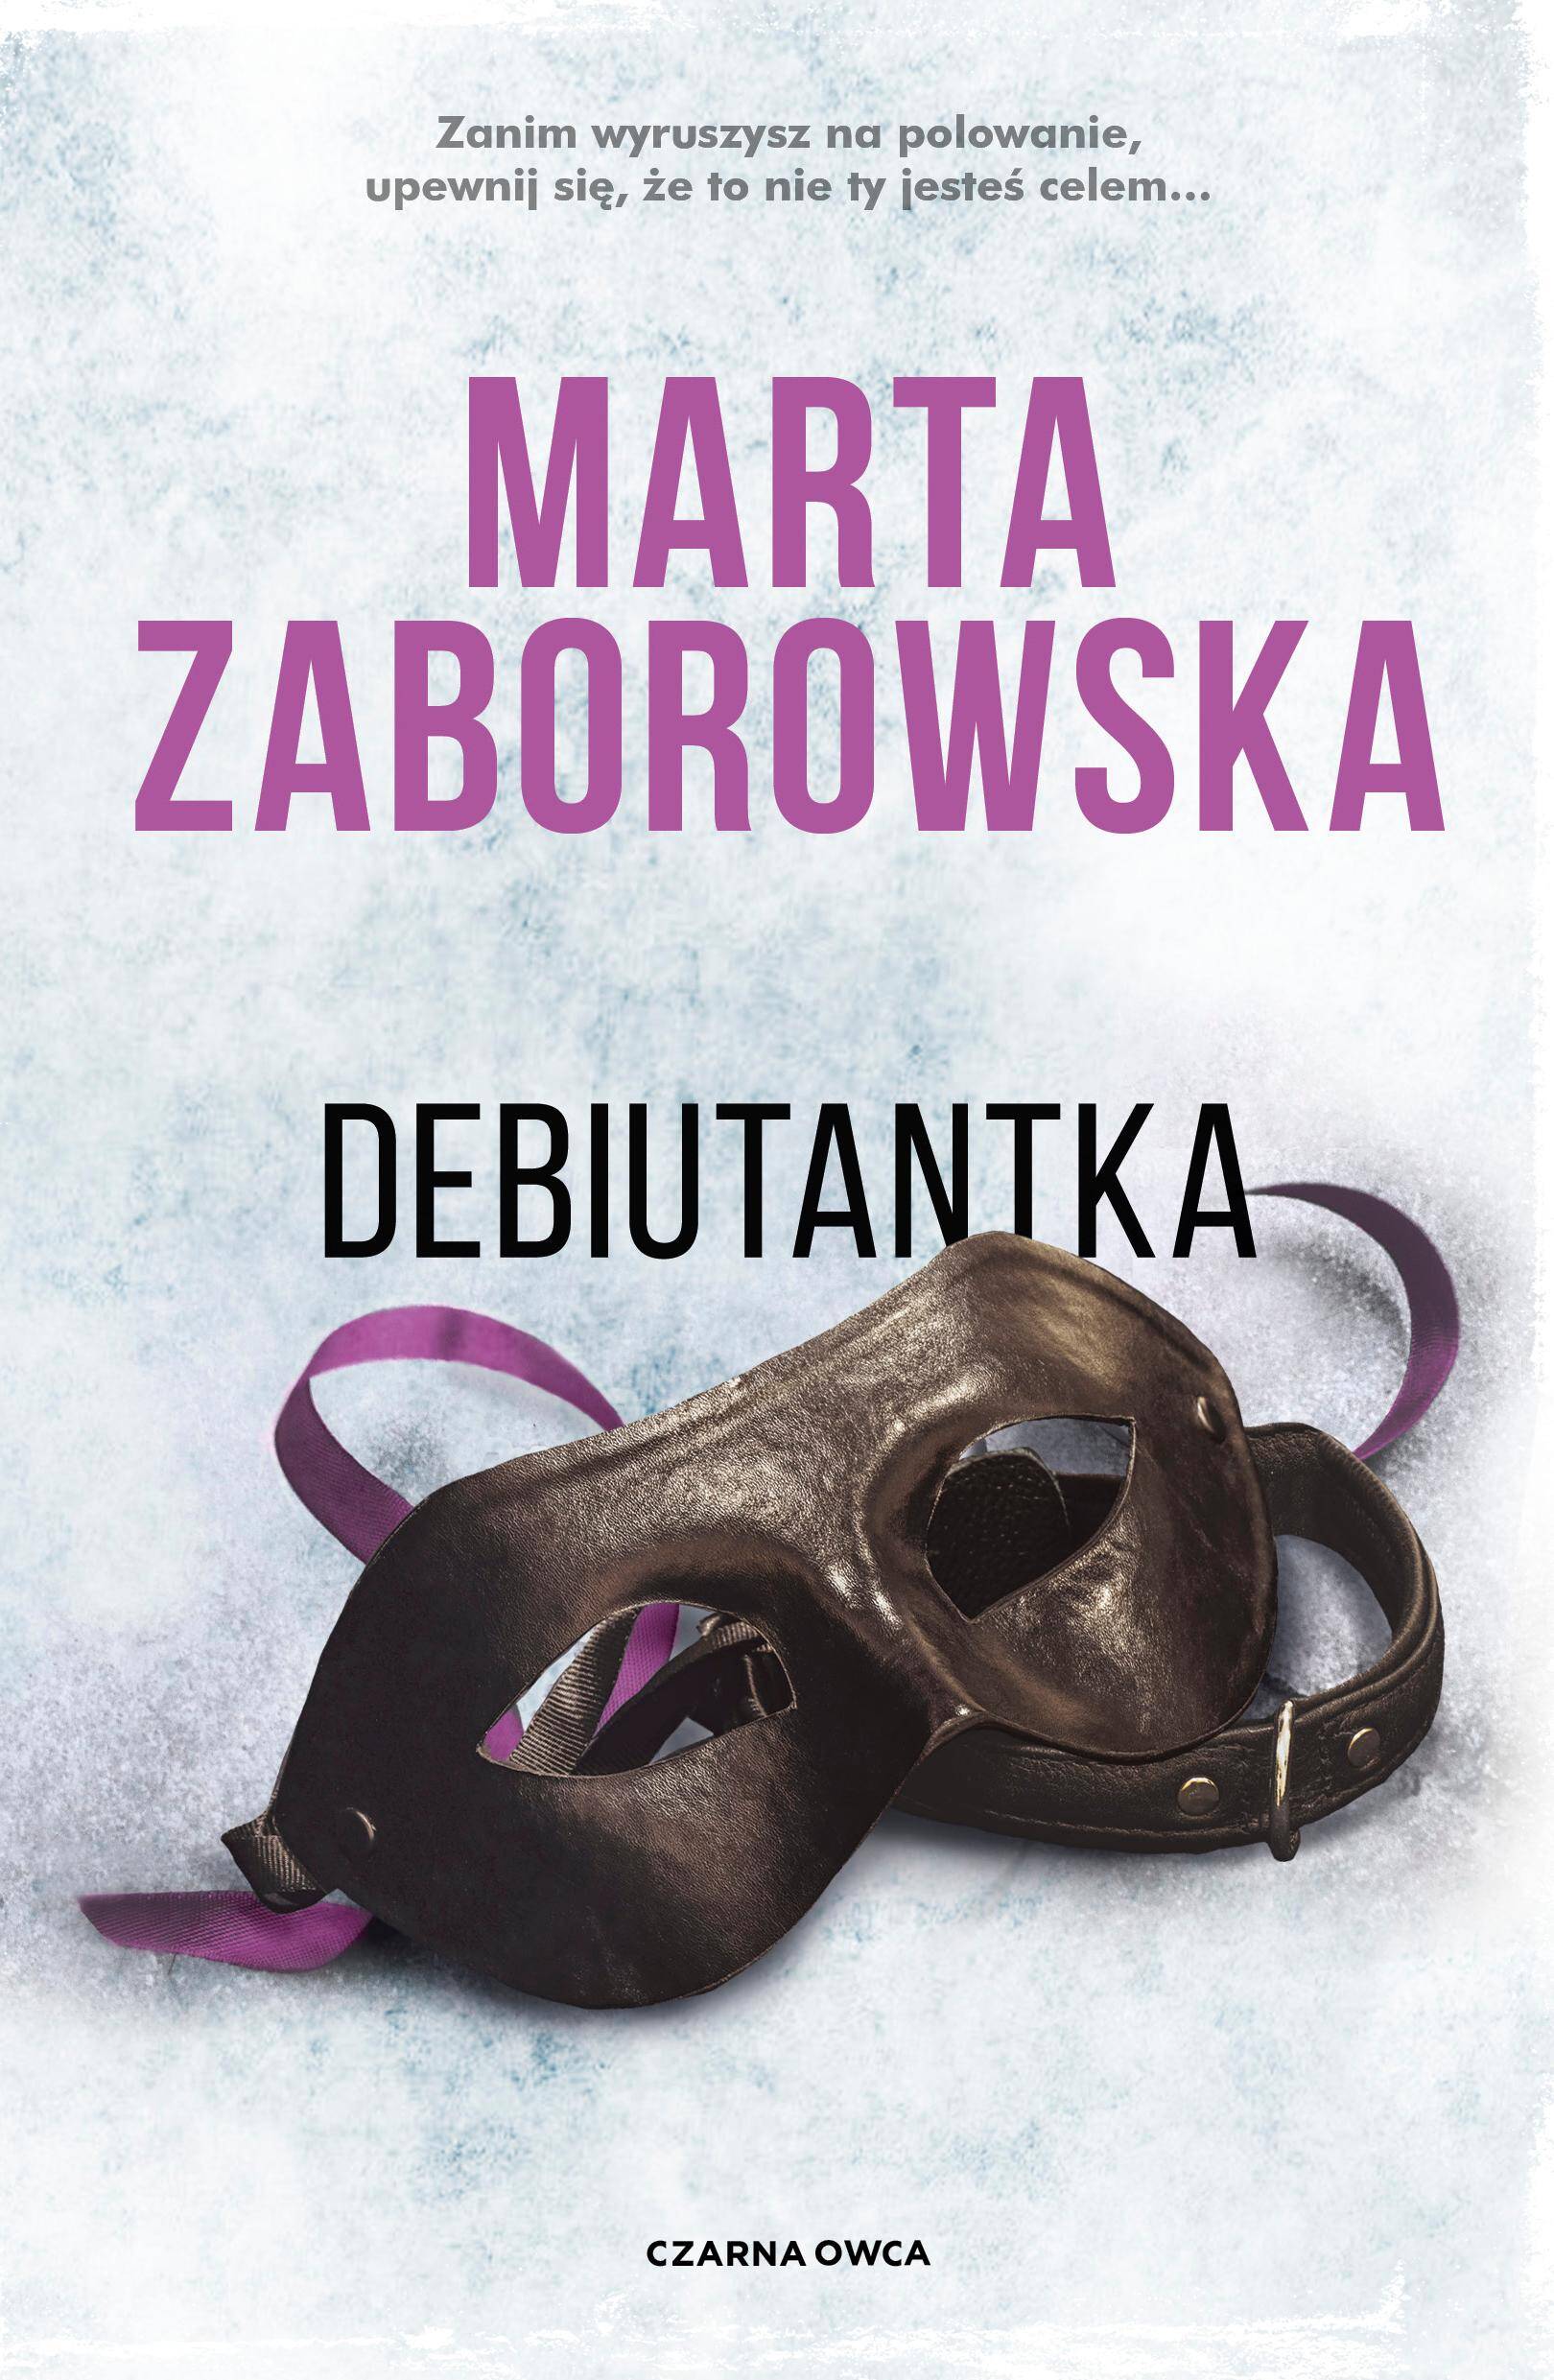 Debiutantka/Zaborowska